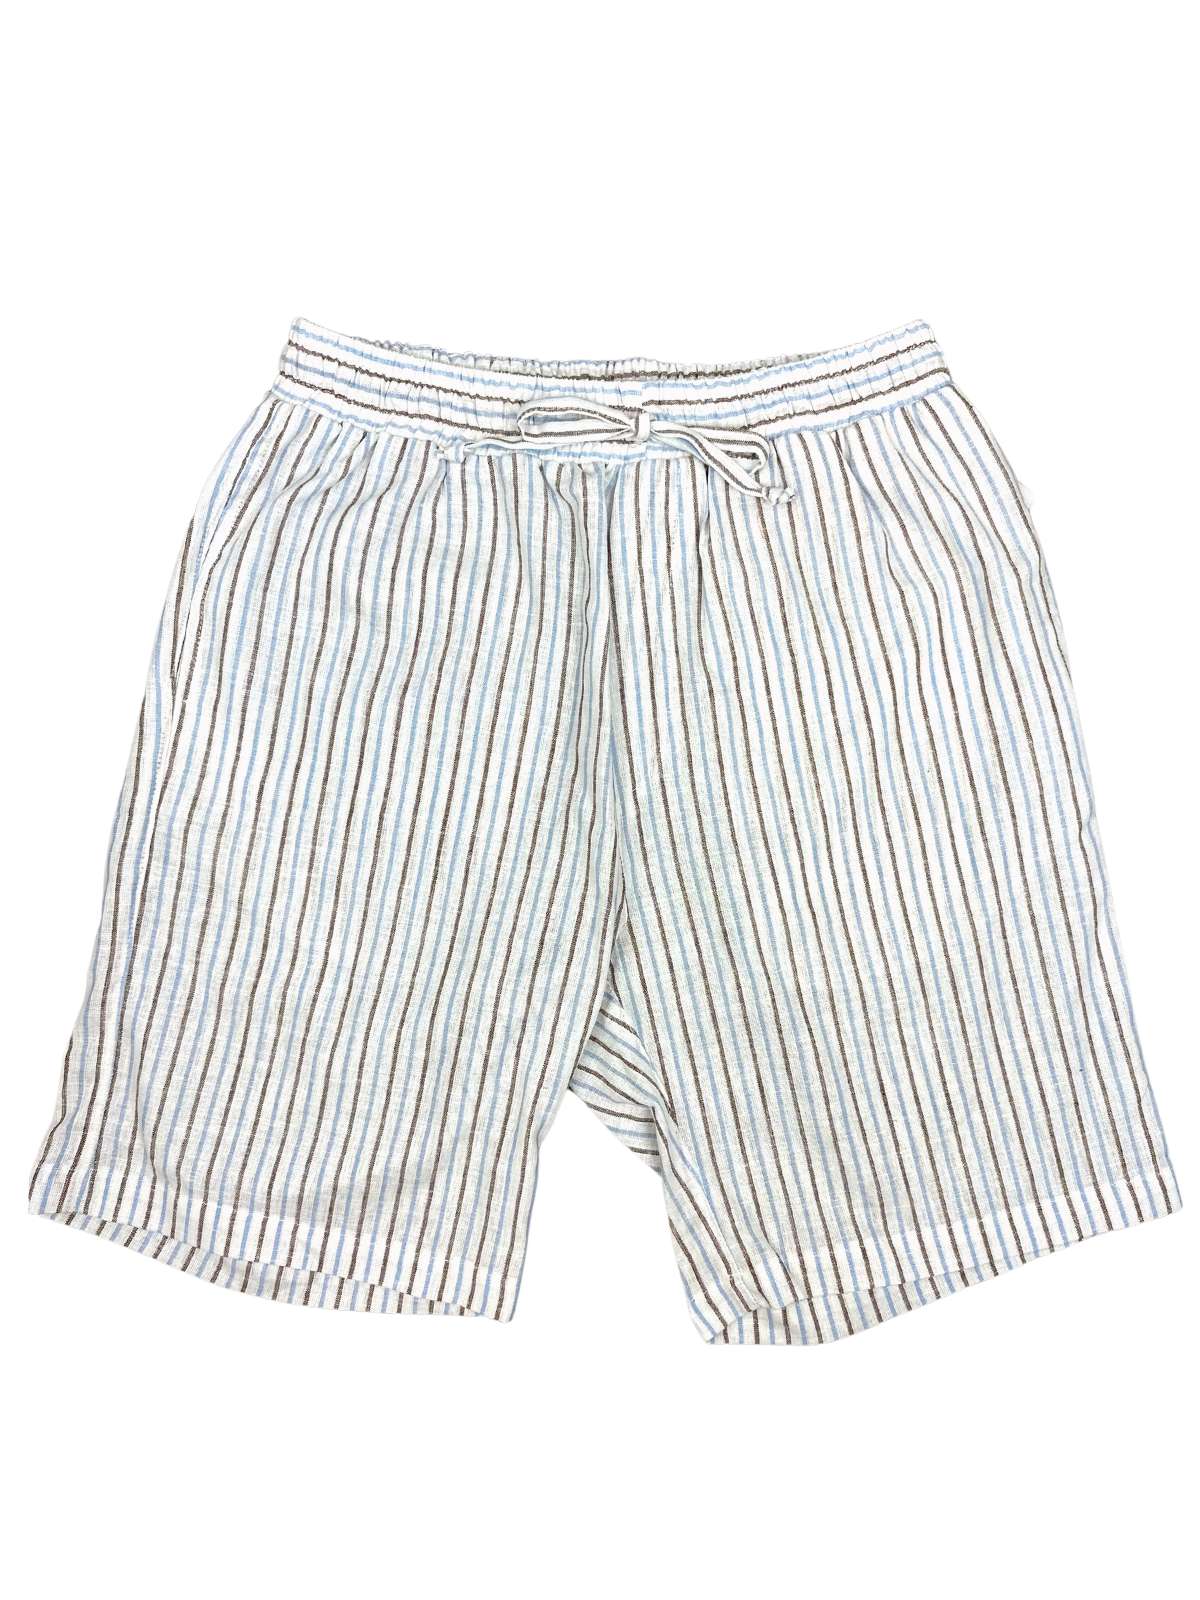 Allana Stripe Linen Short - Brown/White